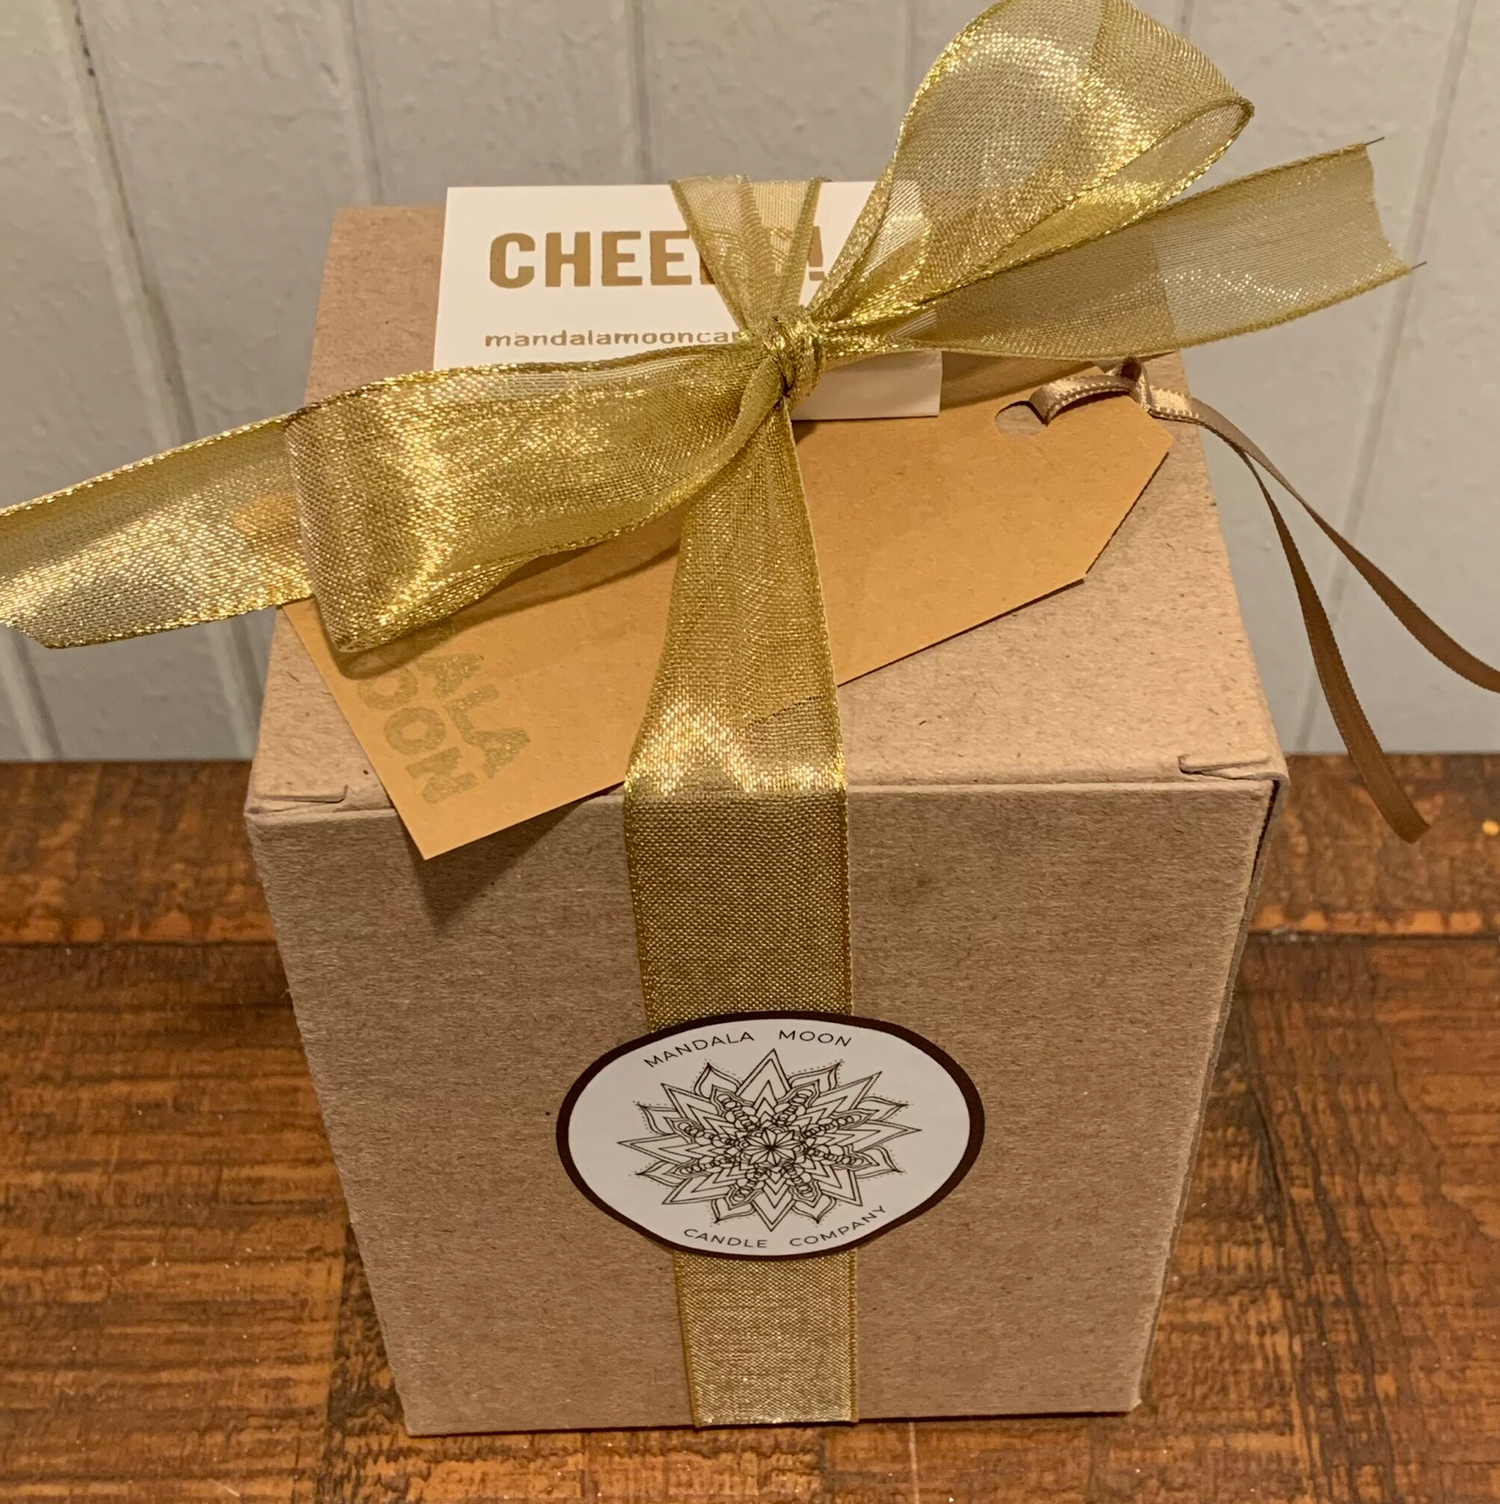 Cheers Mandala Moon Candle in gift box